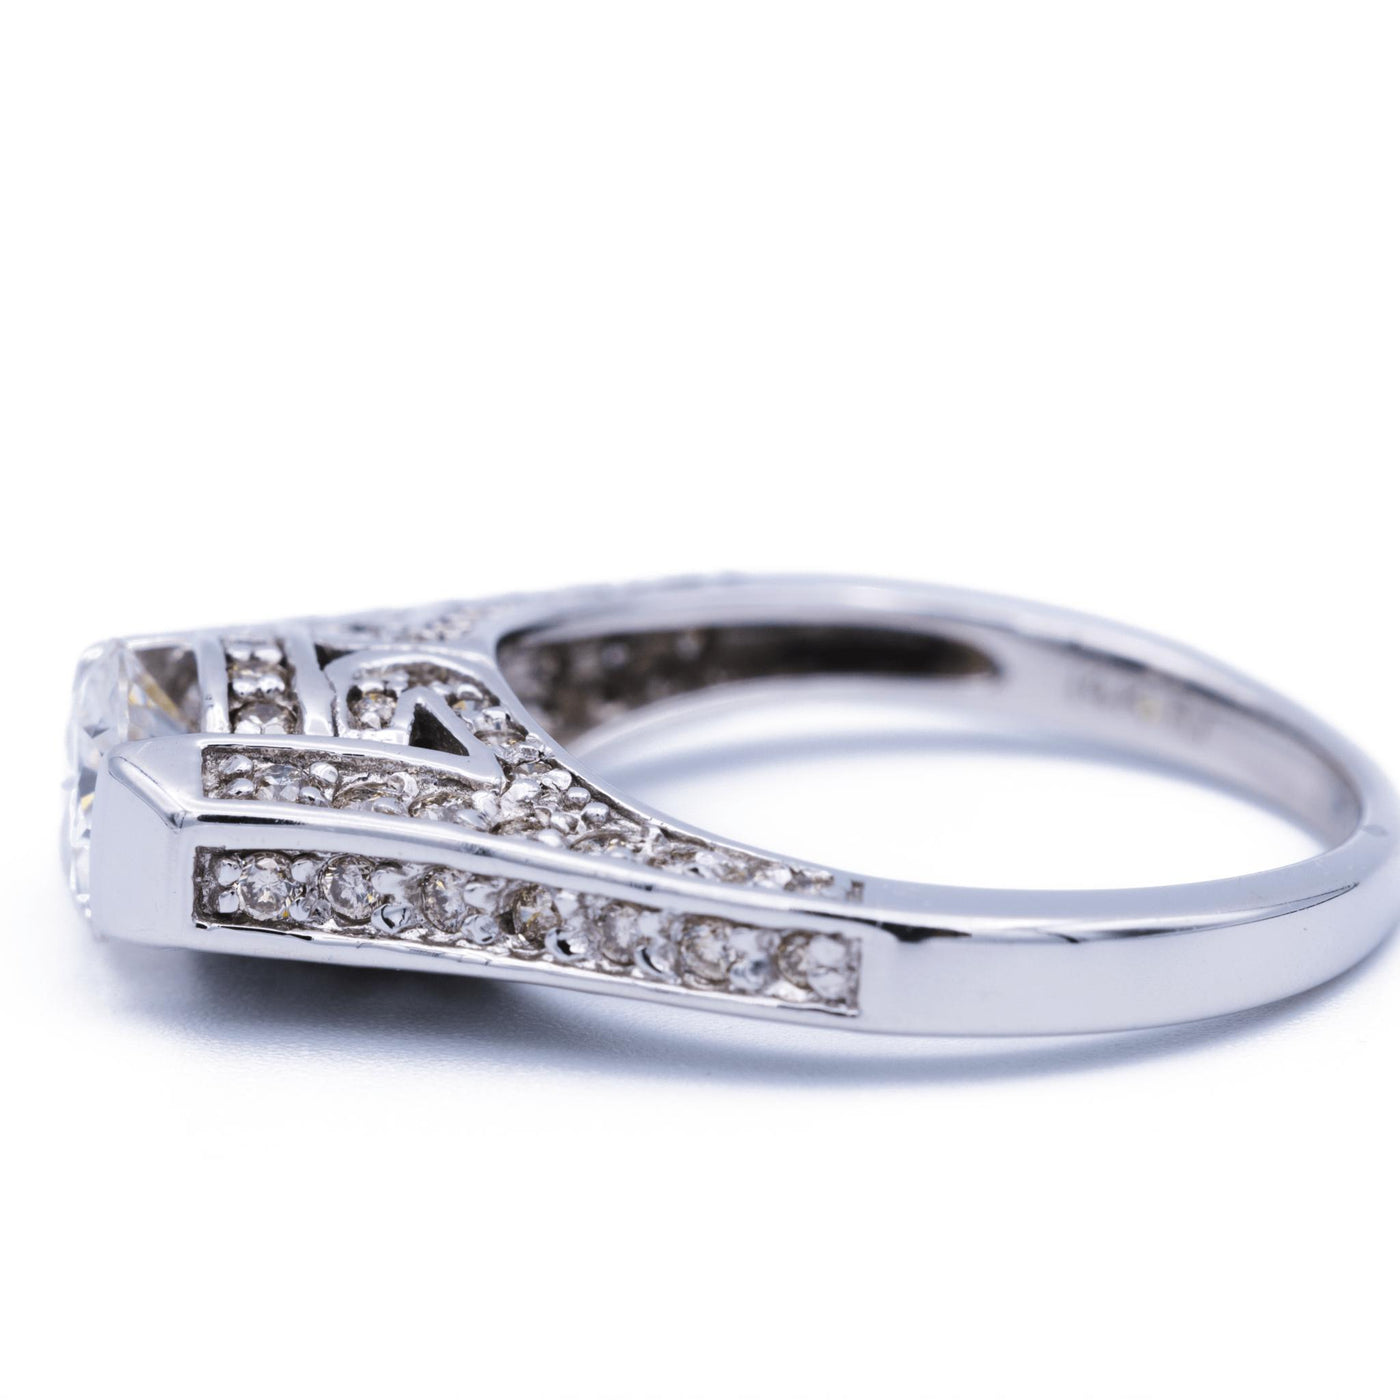 6mm Round Moissanite Diamond Highset Engagement 14K Solid White Gold Ring-Fire & Brilliance ® Creative Designs-Fire & Brilliance ®